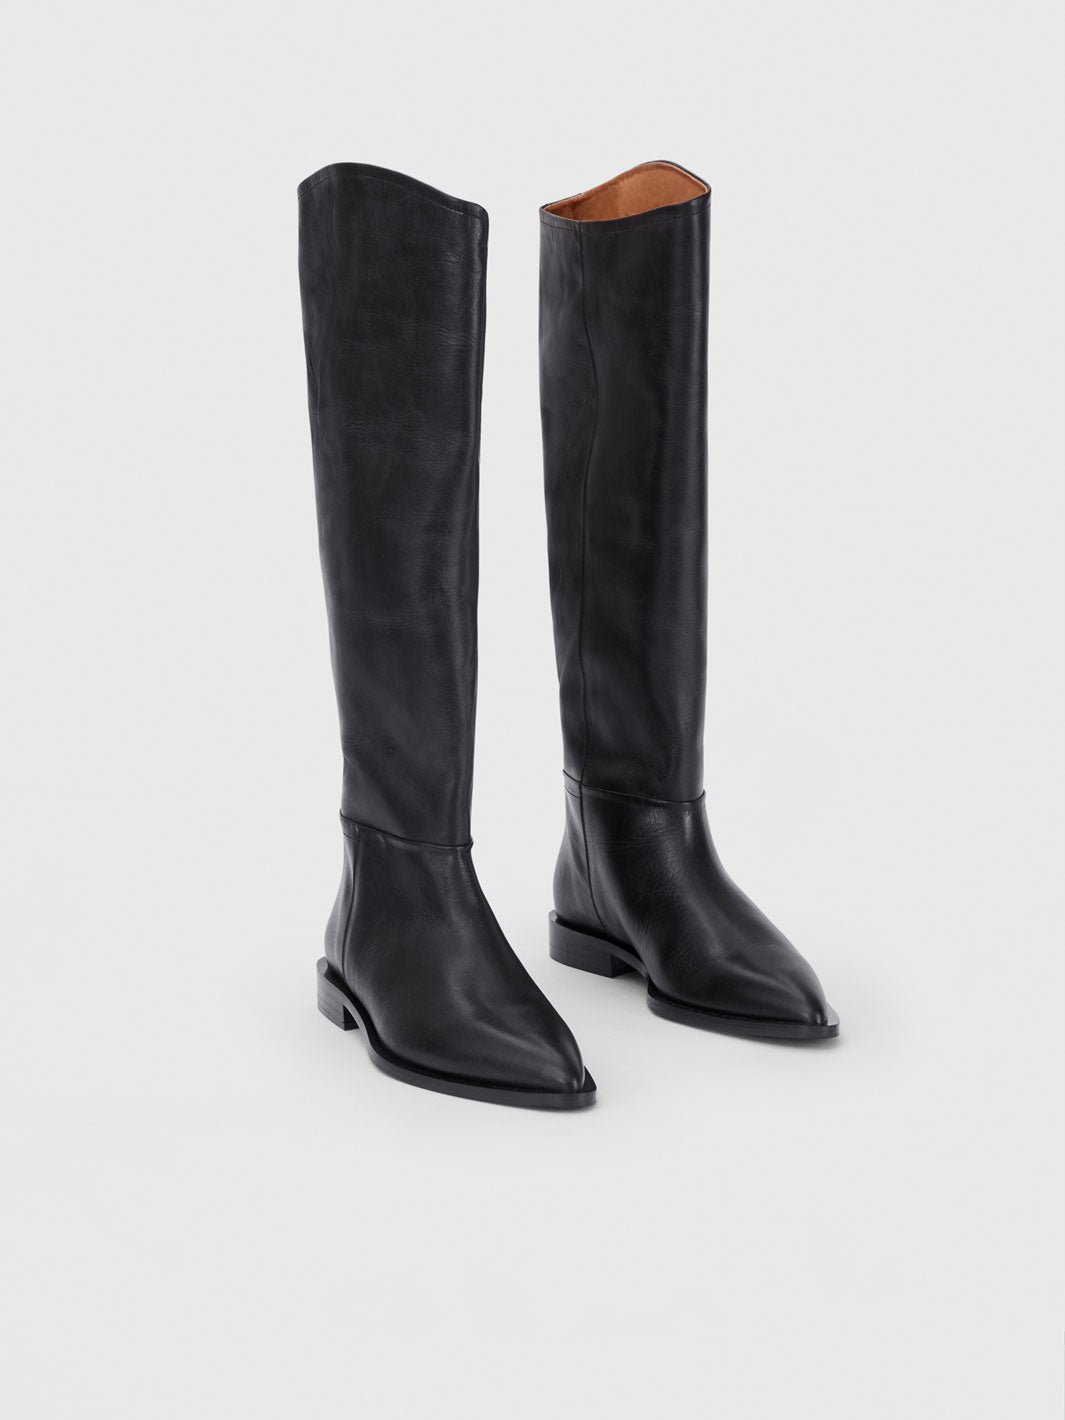 Carditello Black Leather Knee high boots